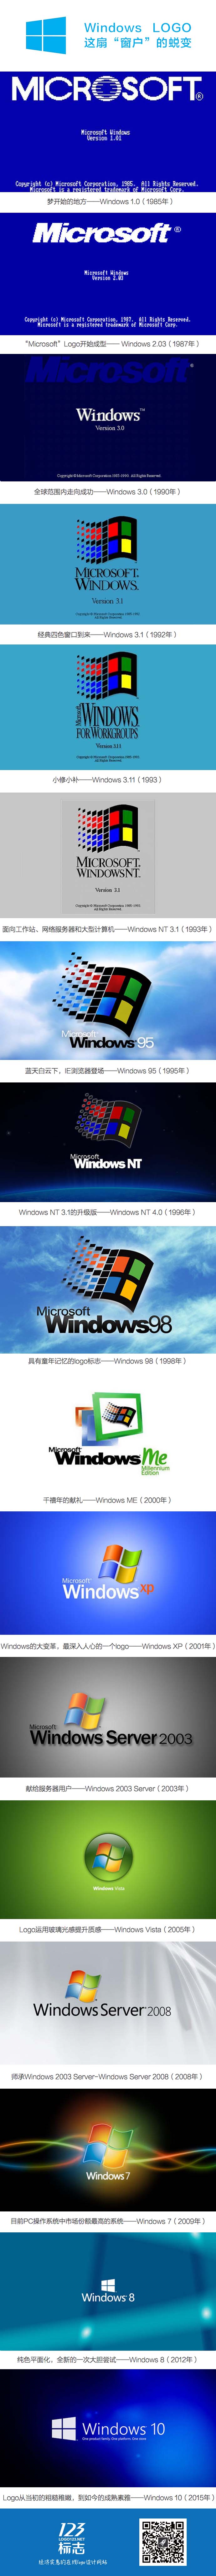 Windows LOGO 这扇“窗户”的蜕变